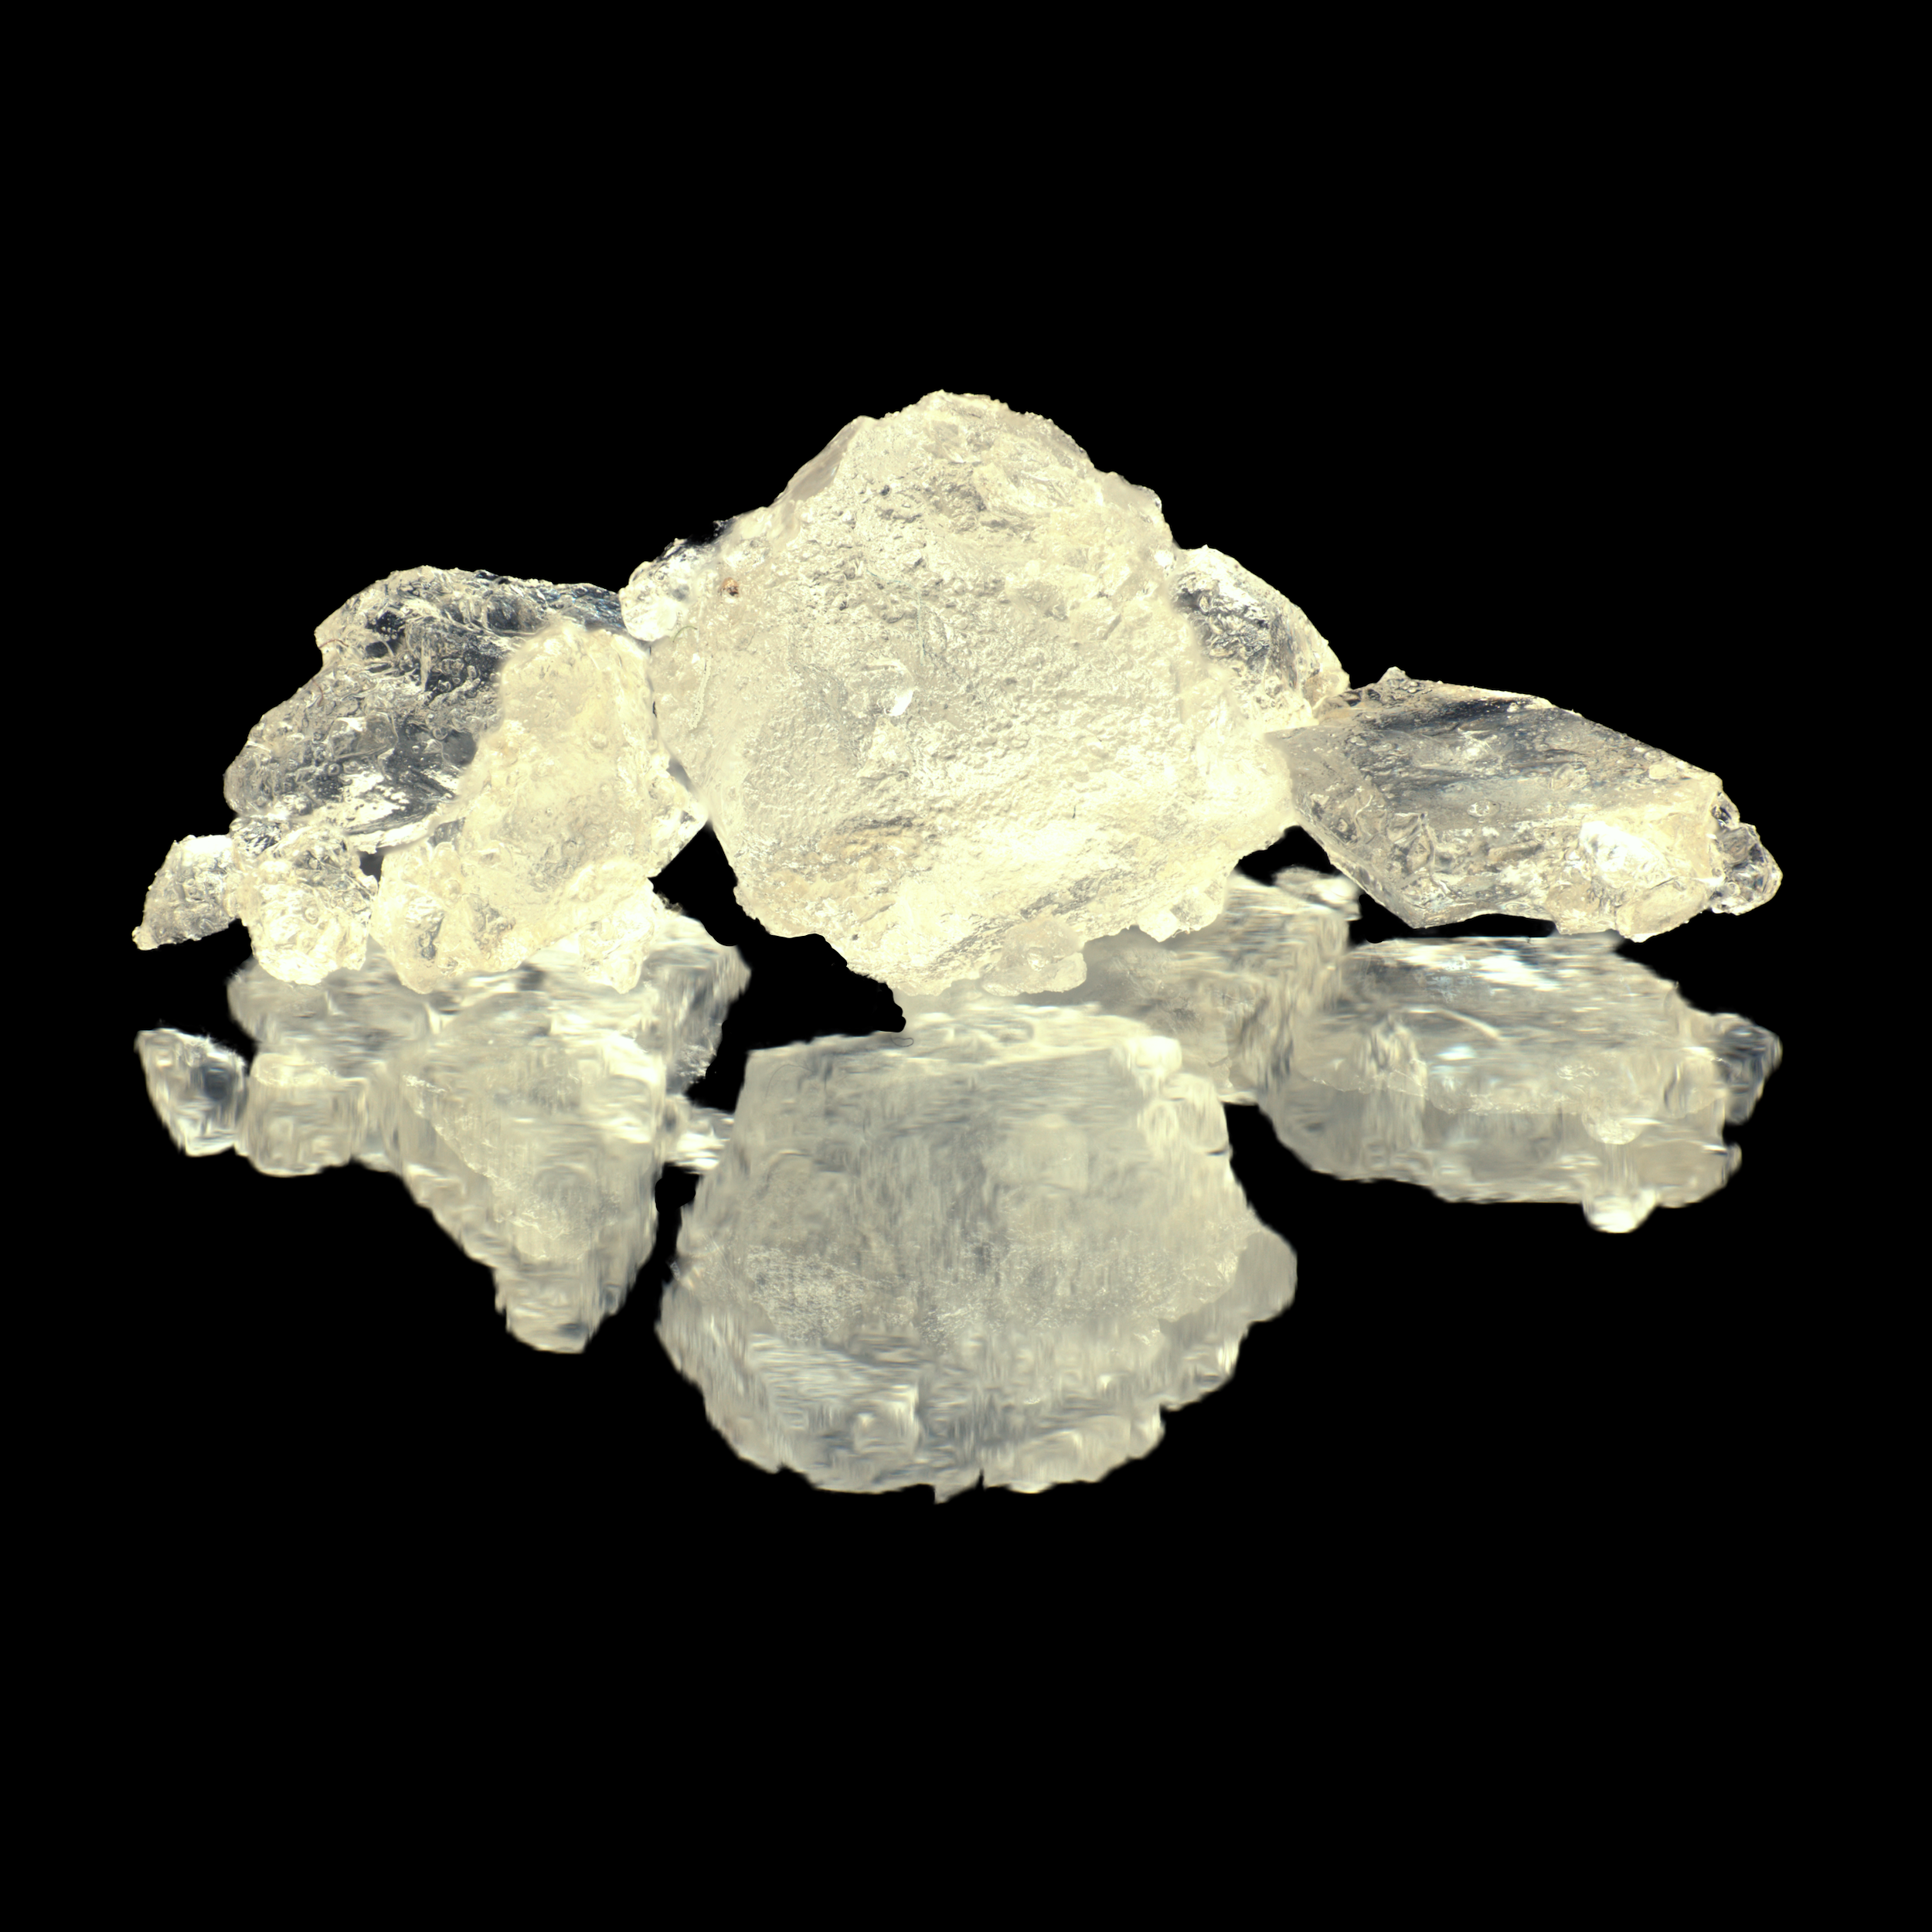 Kiwi Sorbet Live Resin Diamonds